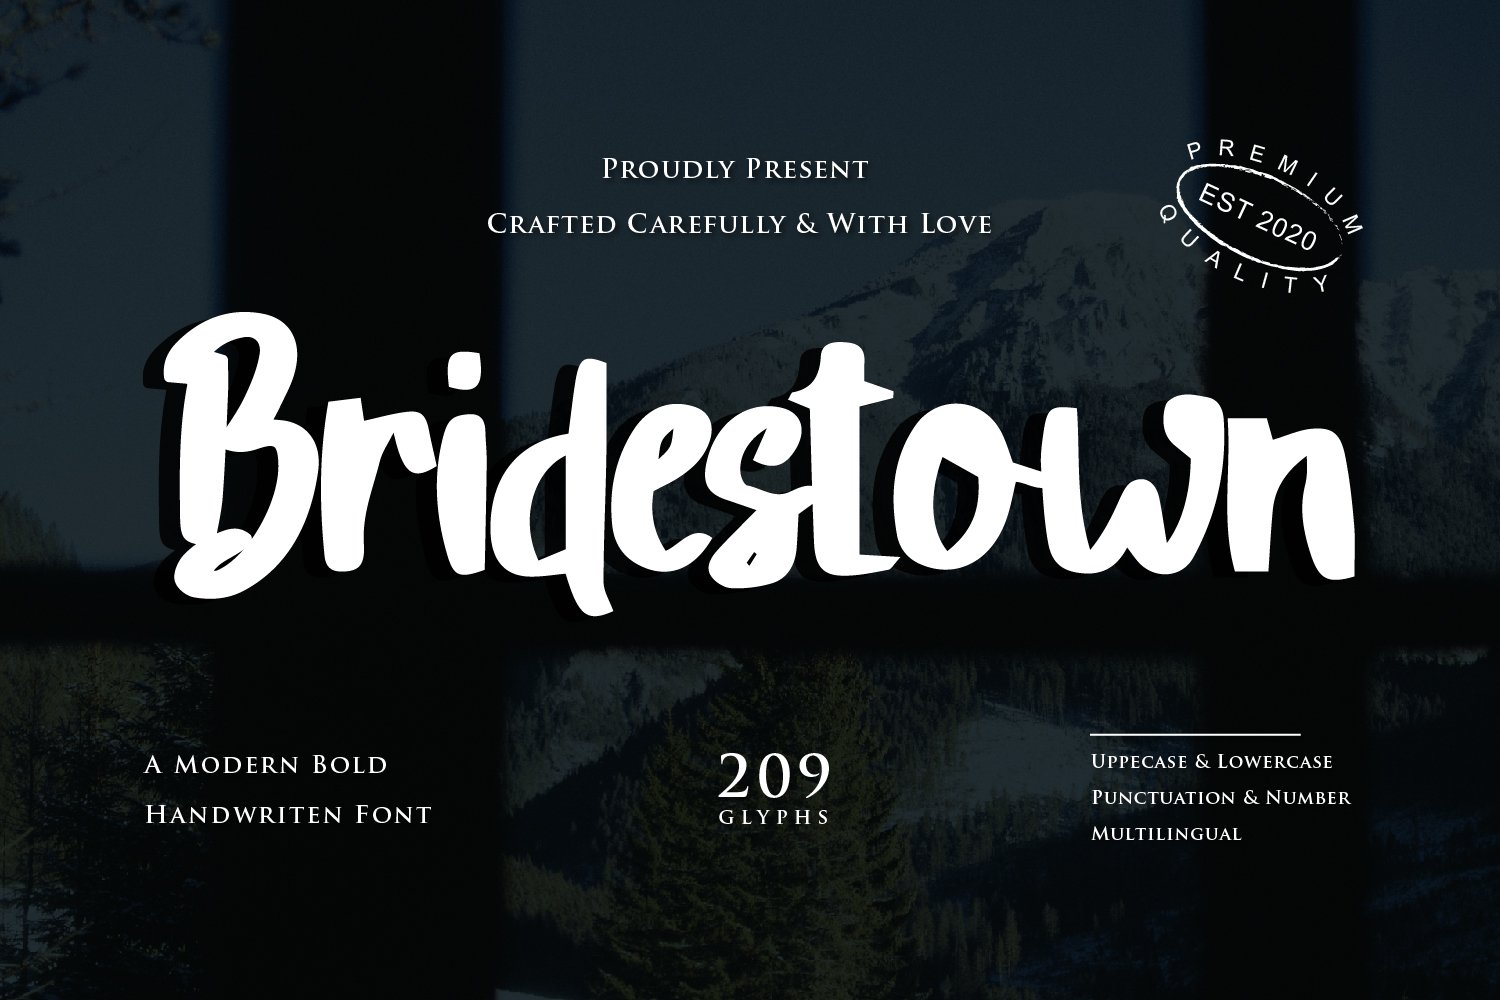 Bridestown - Modern Bold Script font cover image.